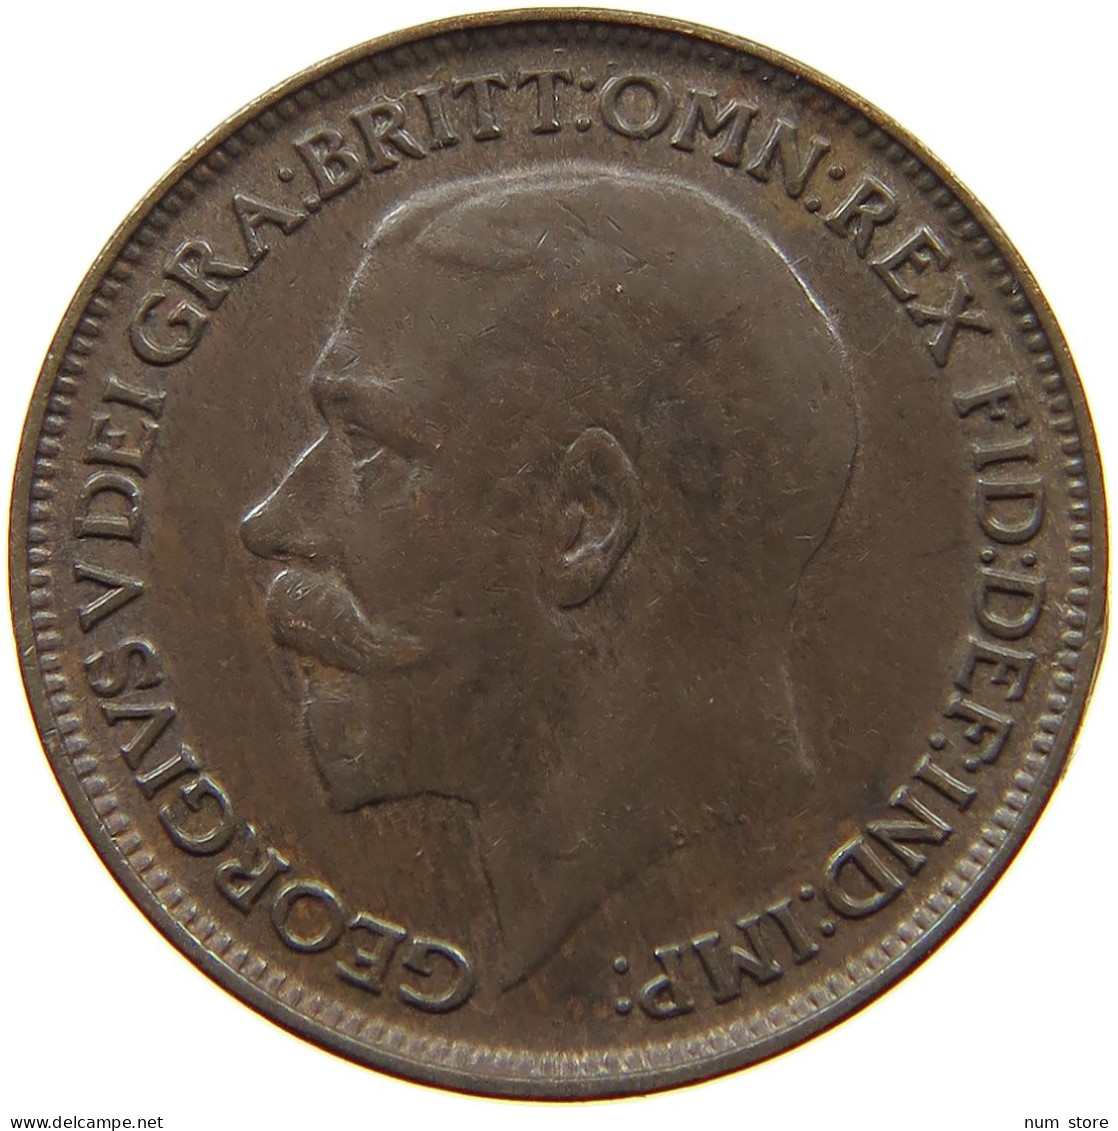 GREAT BRITAIN FARTHING 1925 George V. (1910-1936) #a085 0475 - B. 1 Farthing